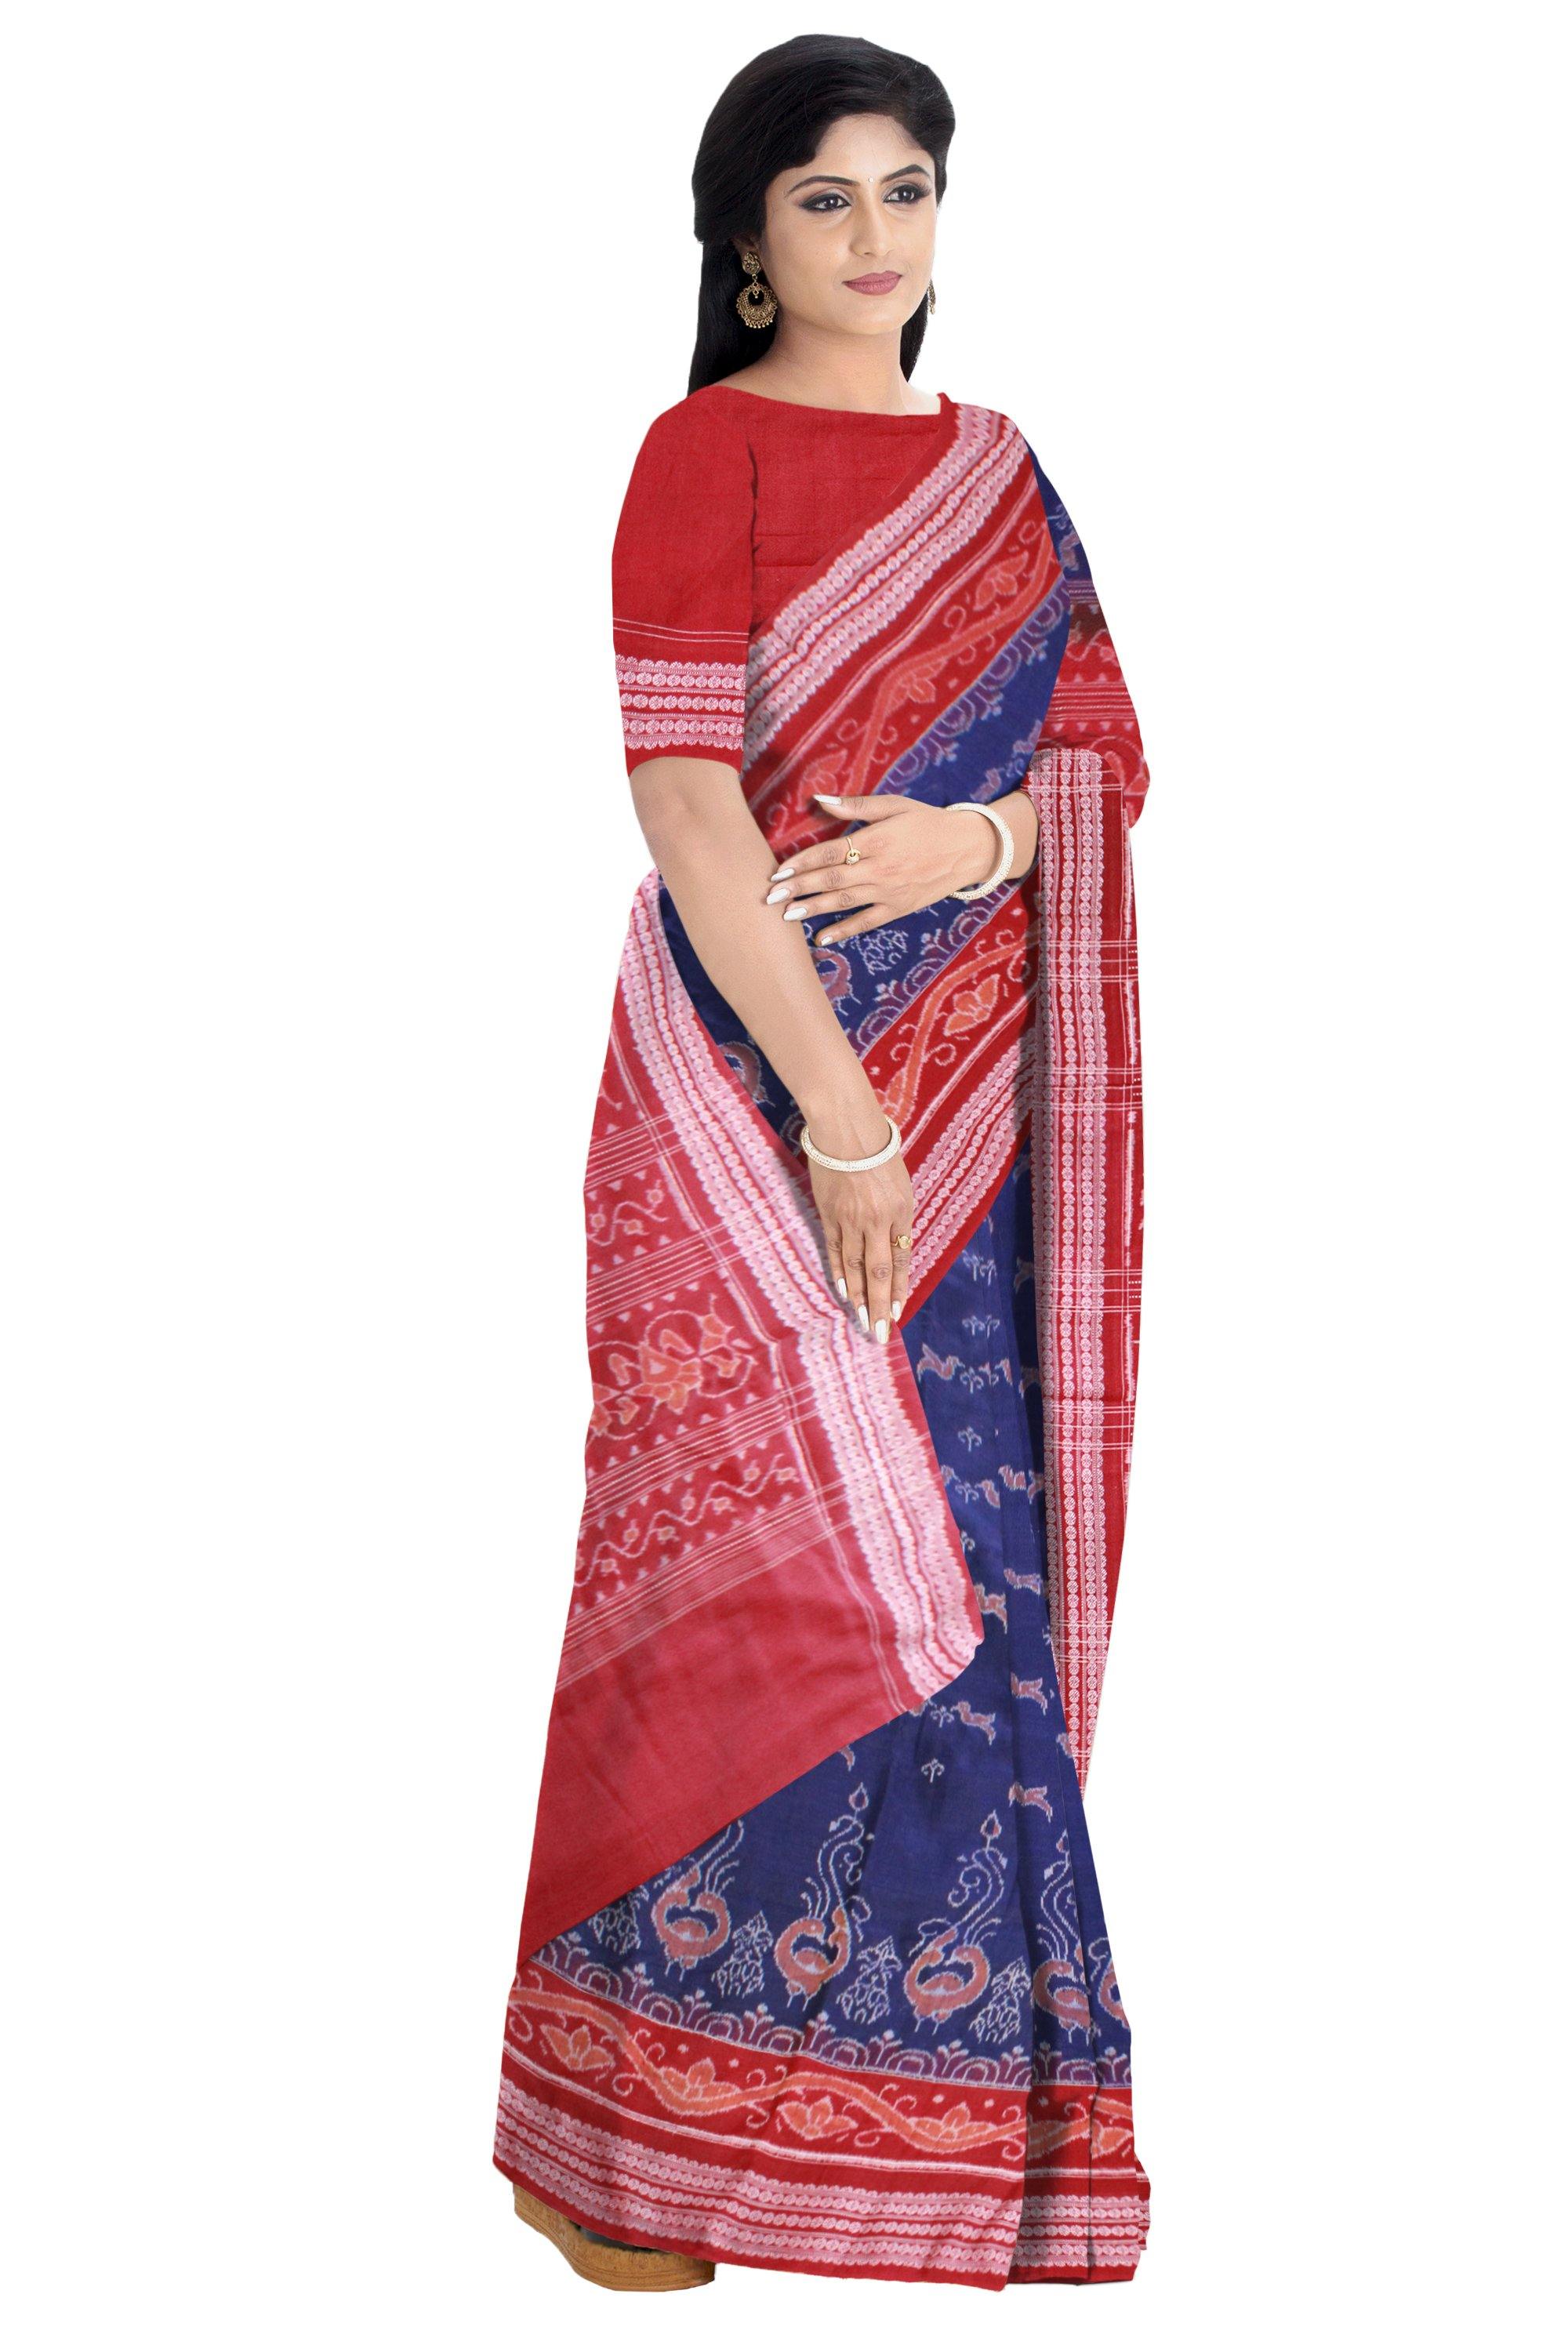 Blue Color Birds print Cotton Ikat saree, Available with blouse piece. - Koshali Arts & Crafts Enterprise